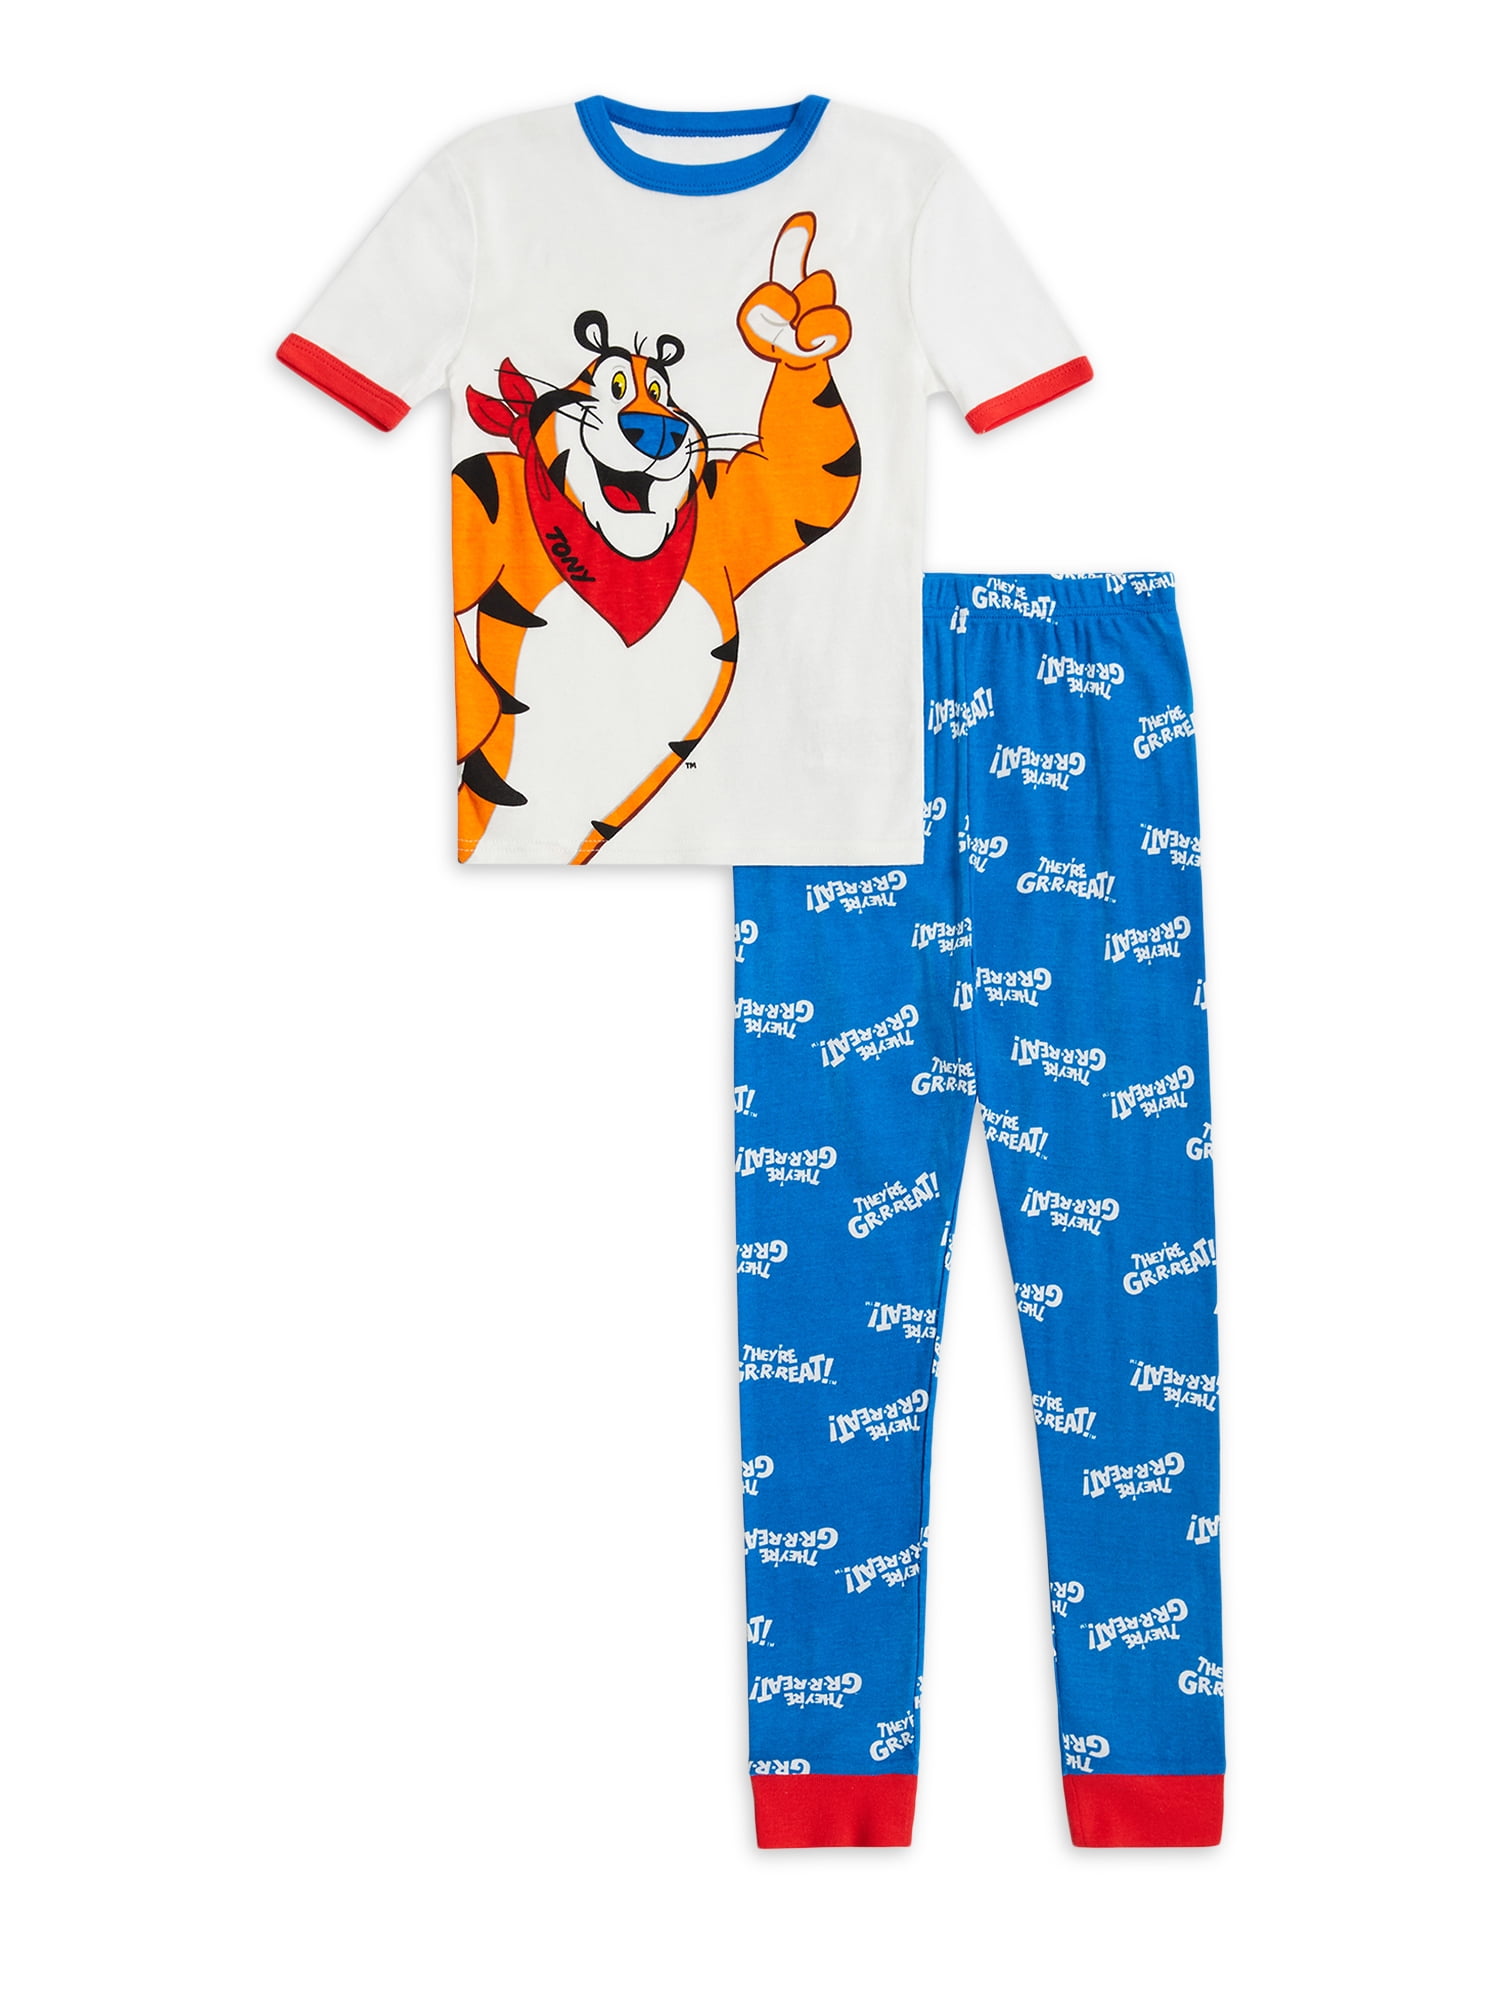 Baby Boys Pyjama Set Disney Tigger Pajama New Cotton Nightwear Age 9-36 Months 